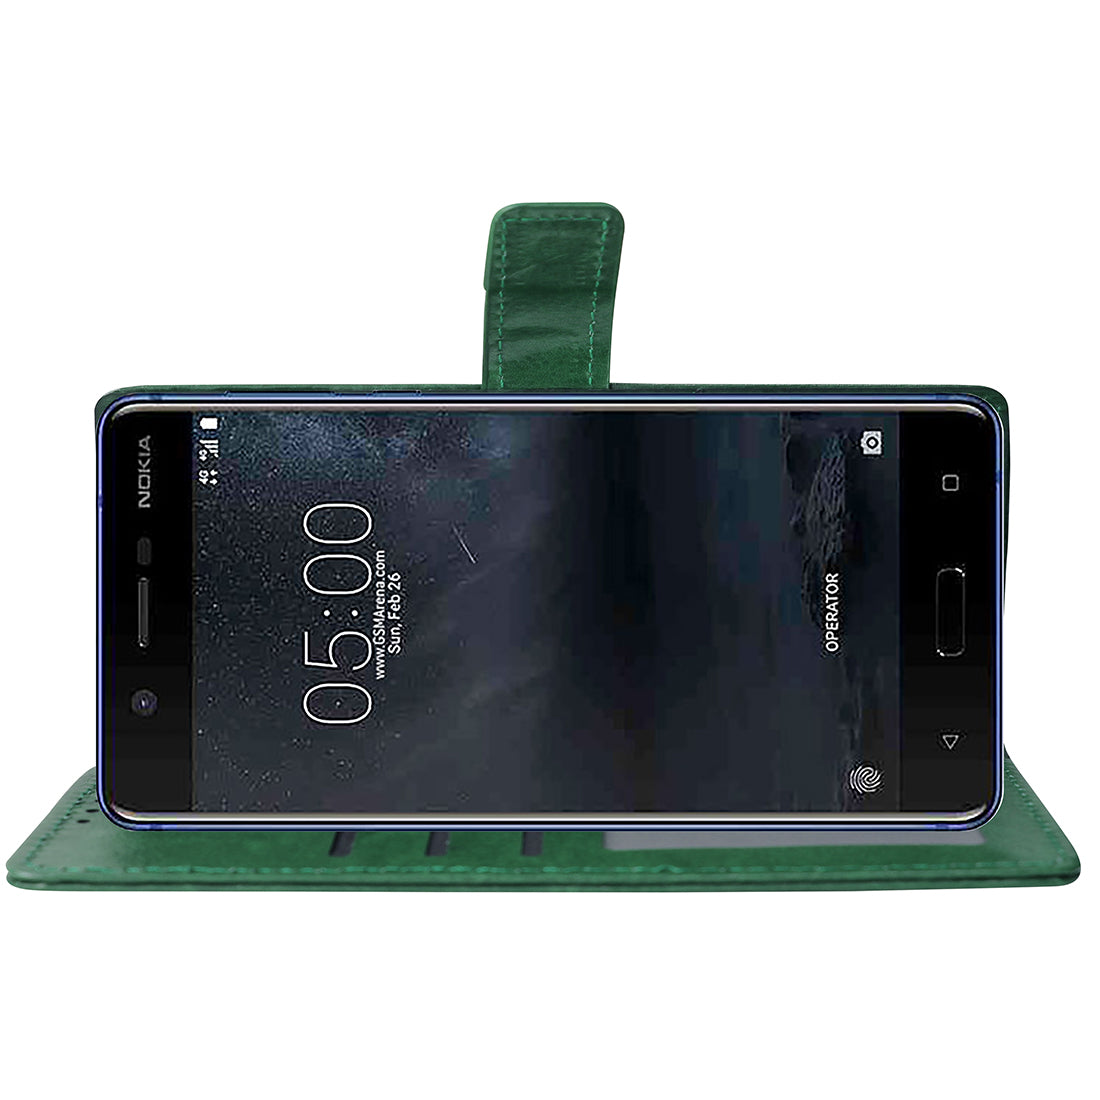 Premium Wallet Flip Cover for Nokia 5